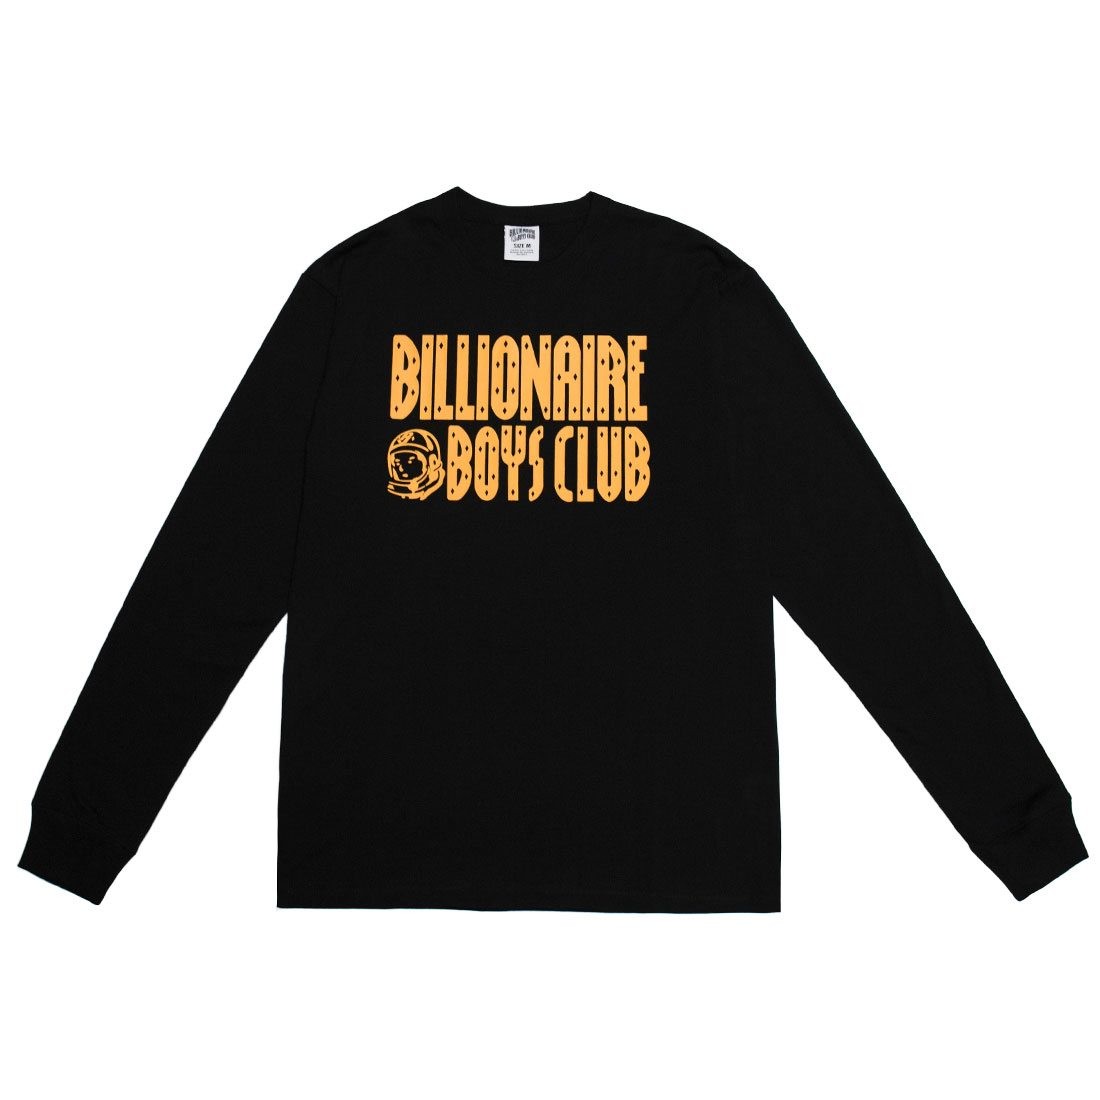 Billionaire Boys Club Dark Aurora Ship Vs. Kraken Shirt Sz. XL